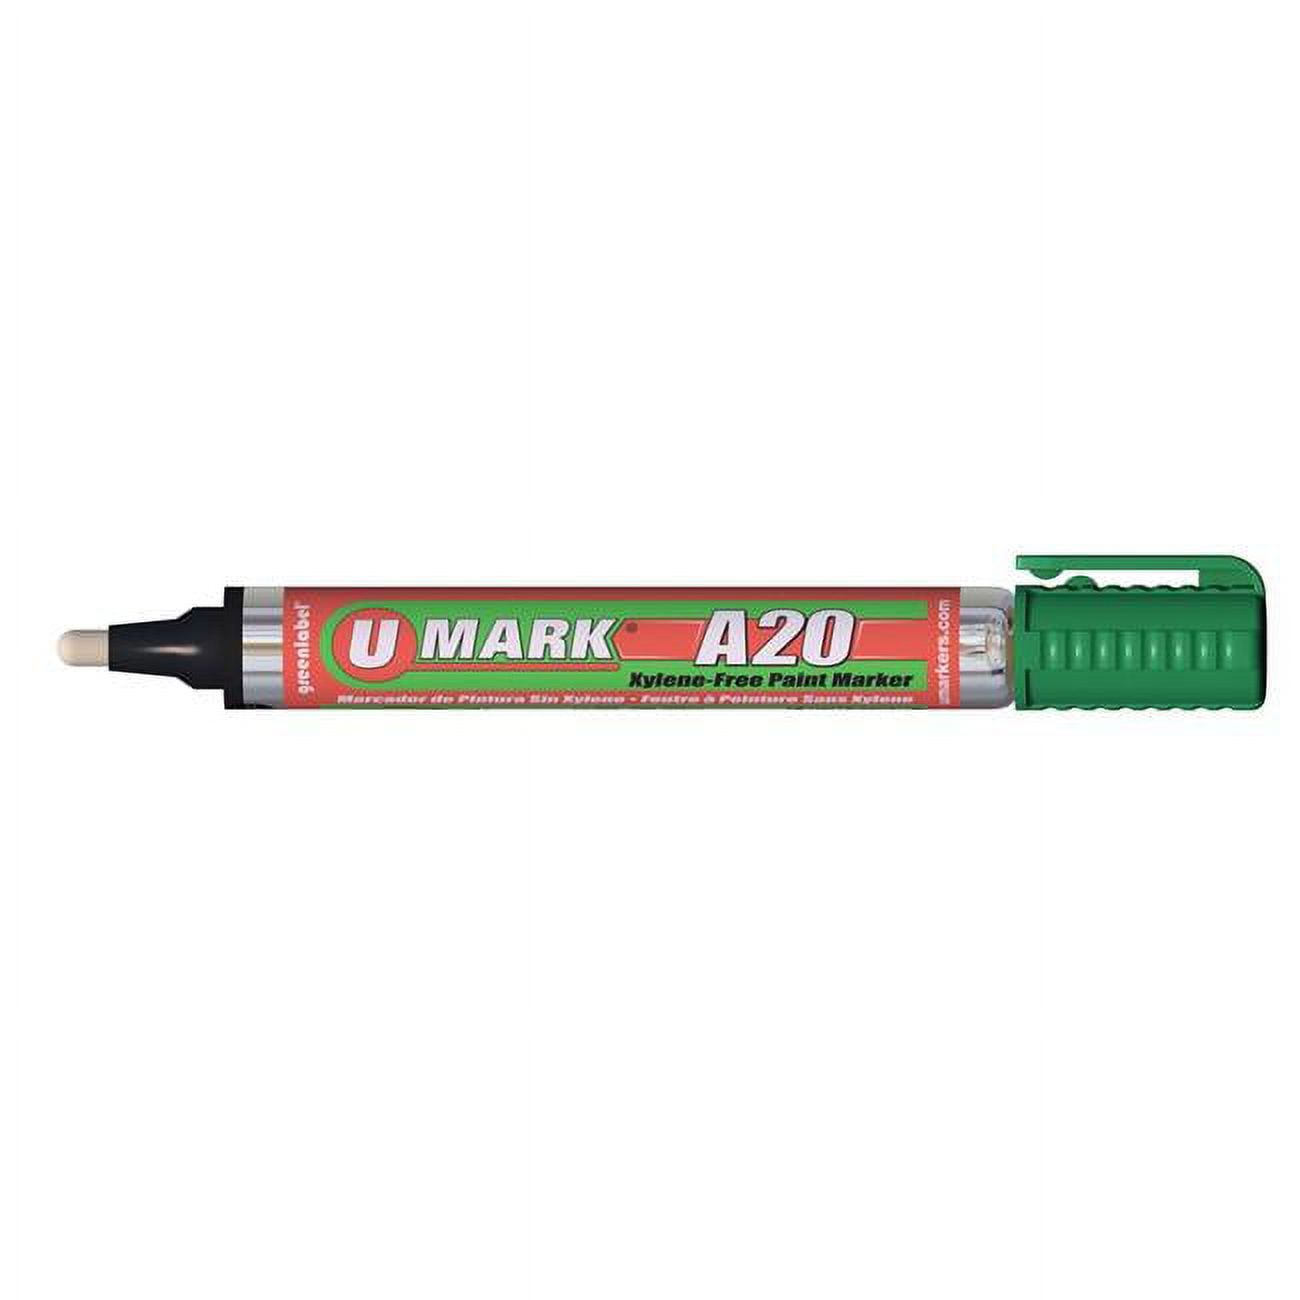 Markal PRO-LINE HP Paint Markers, 1/8 in Tip, Medium, Light Blue - 12/Box  (434-96971) 